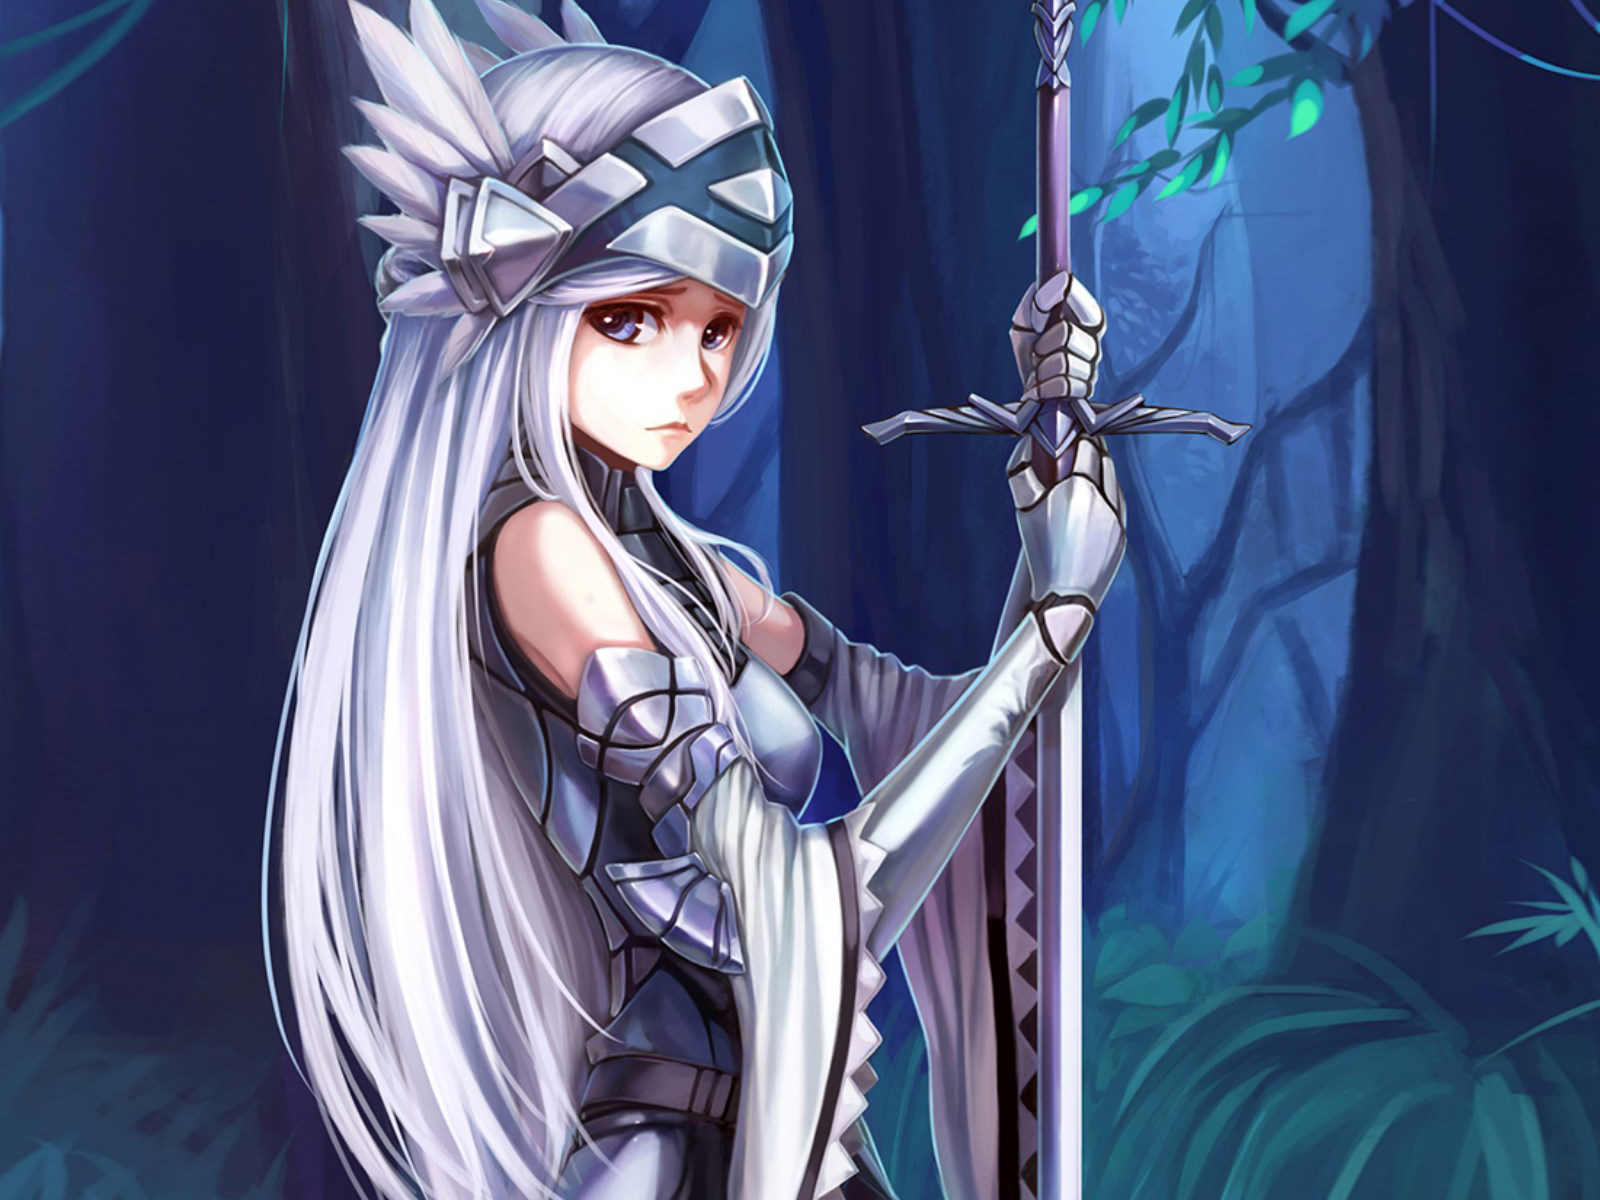 Lenessia holding a sword